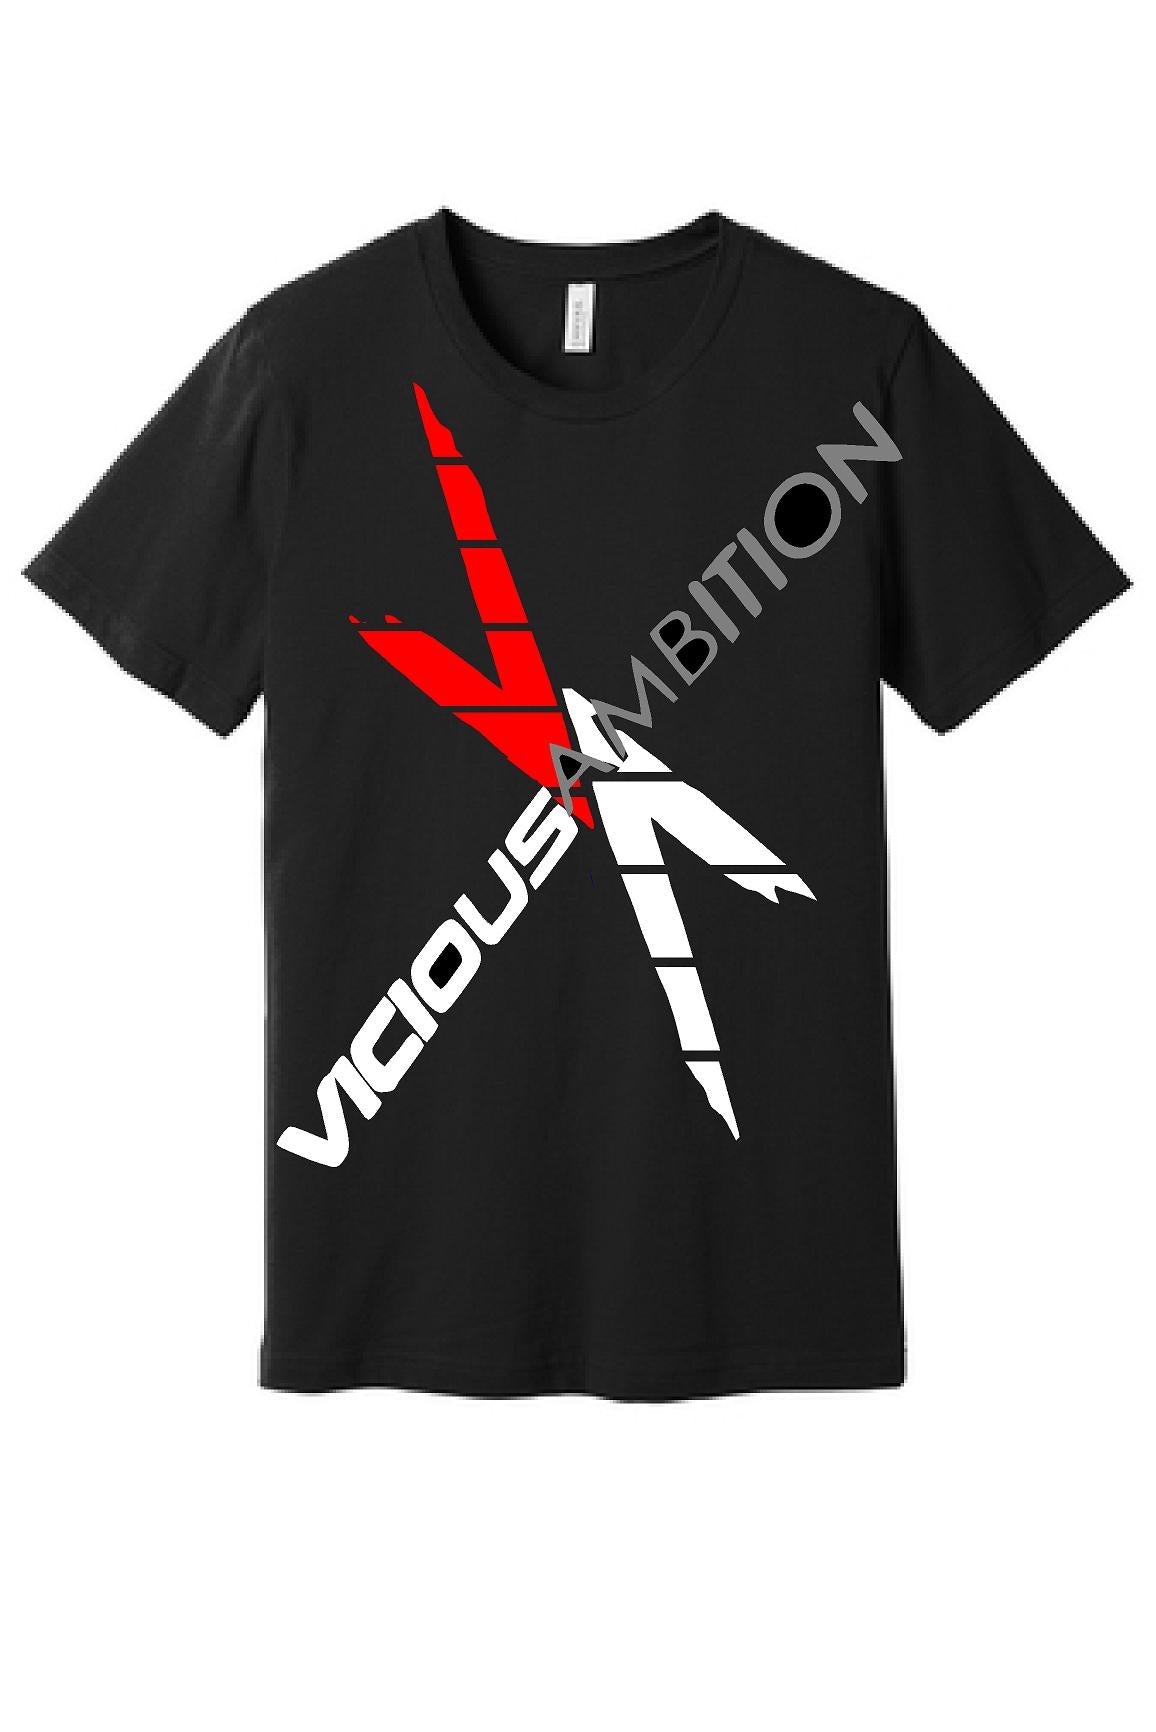 Vicious Ambition Bella Unisex short sleeve t-shirt